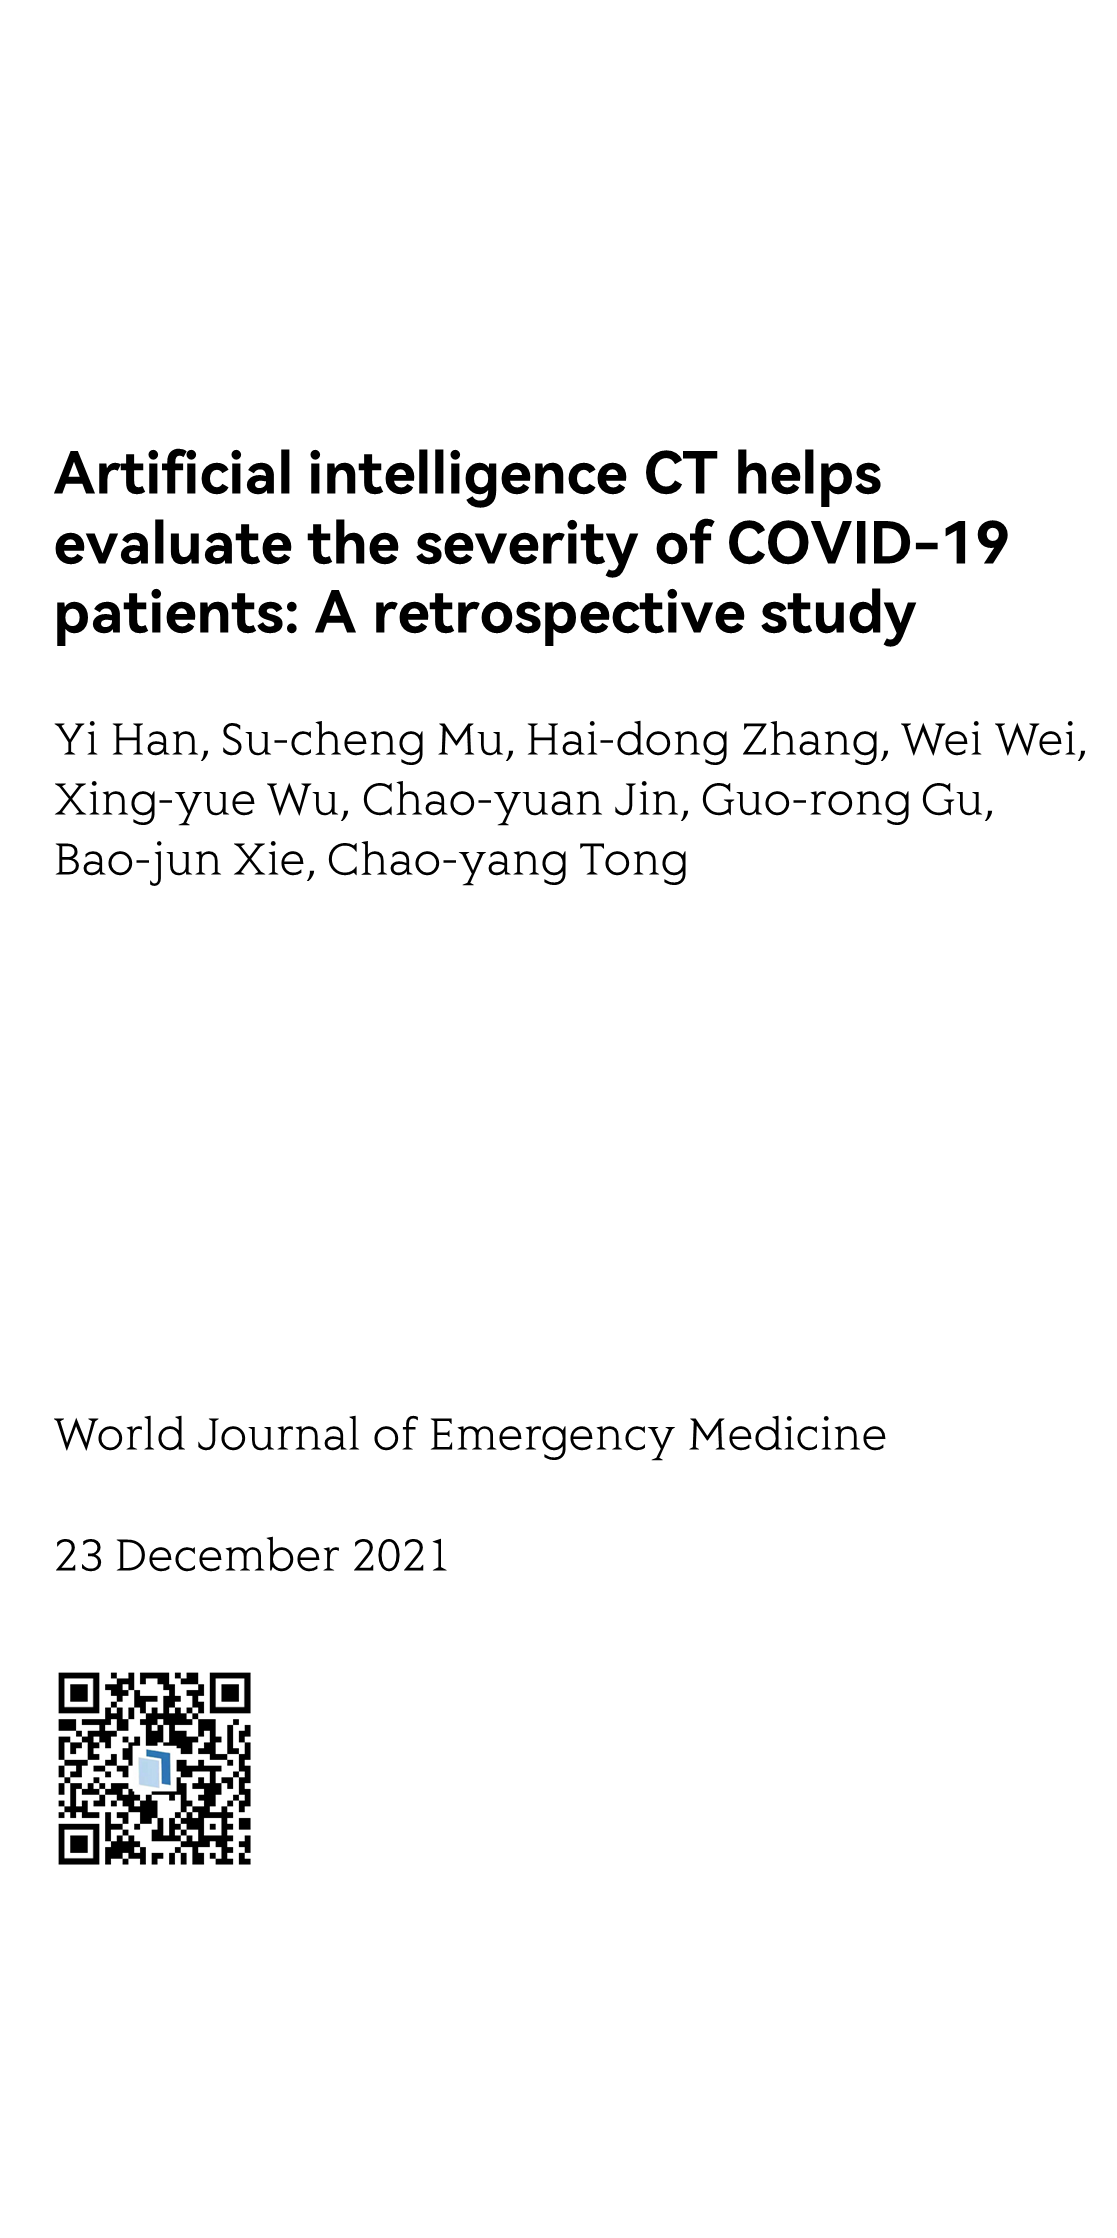 World Journal of Emergency Medicine_1